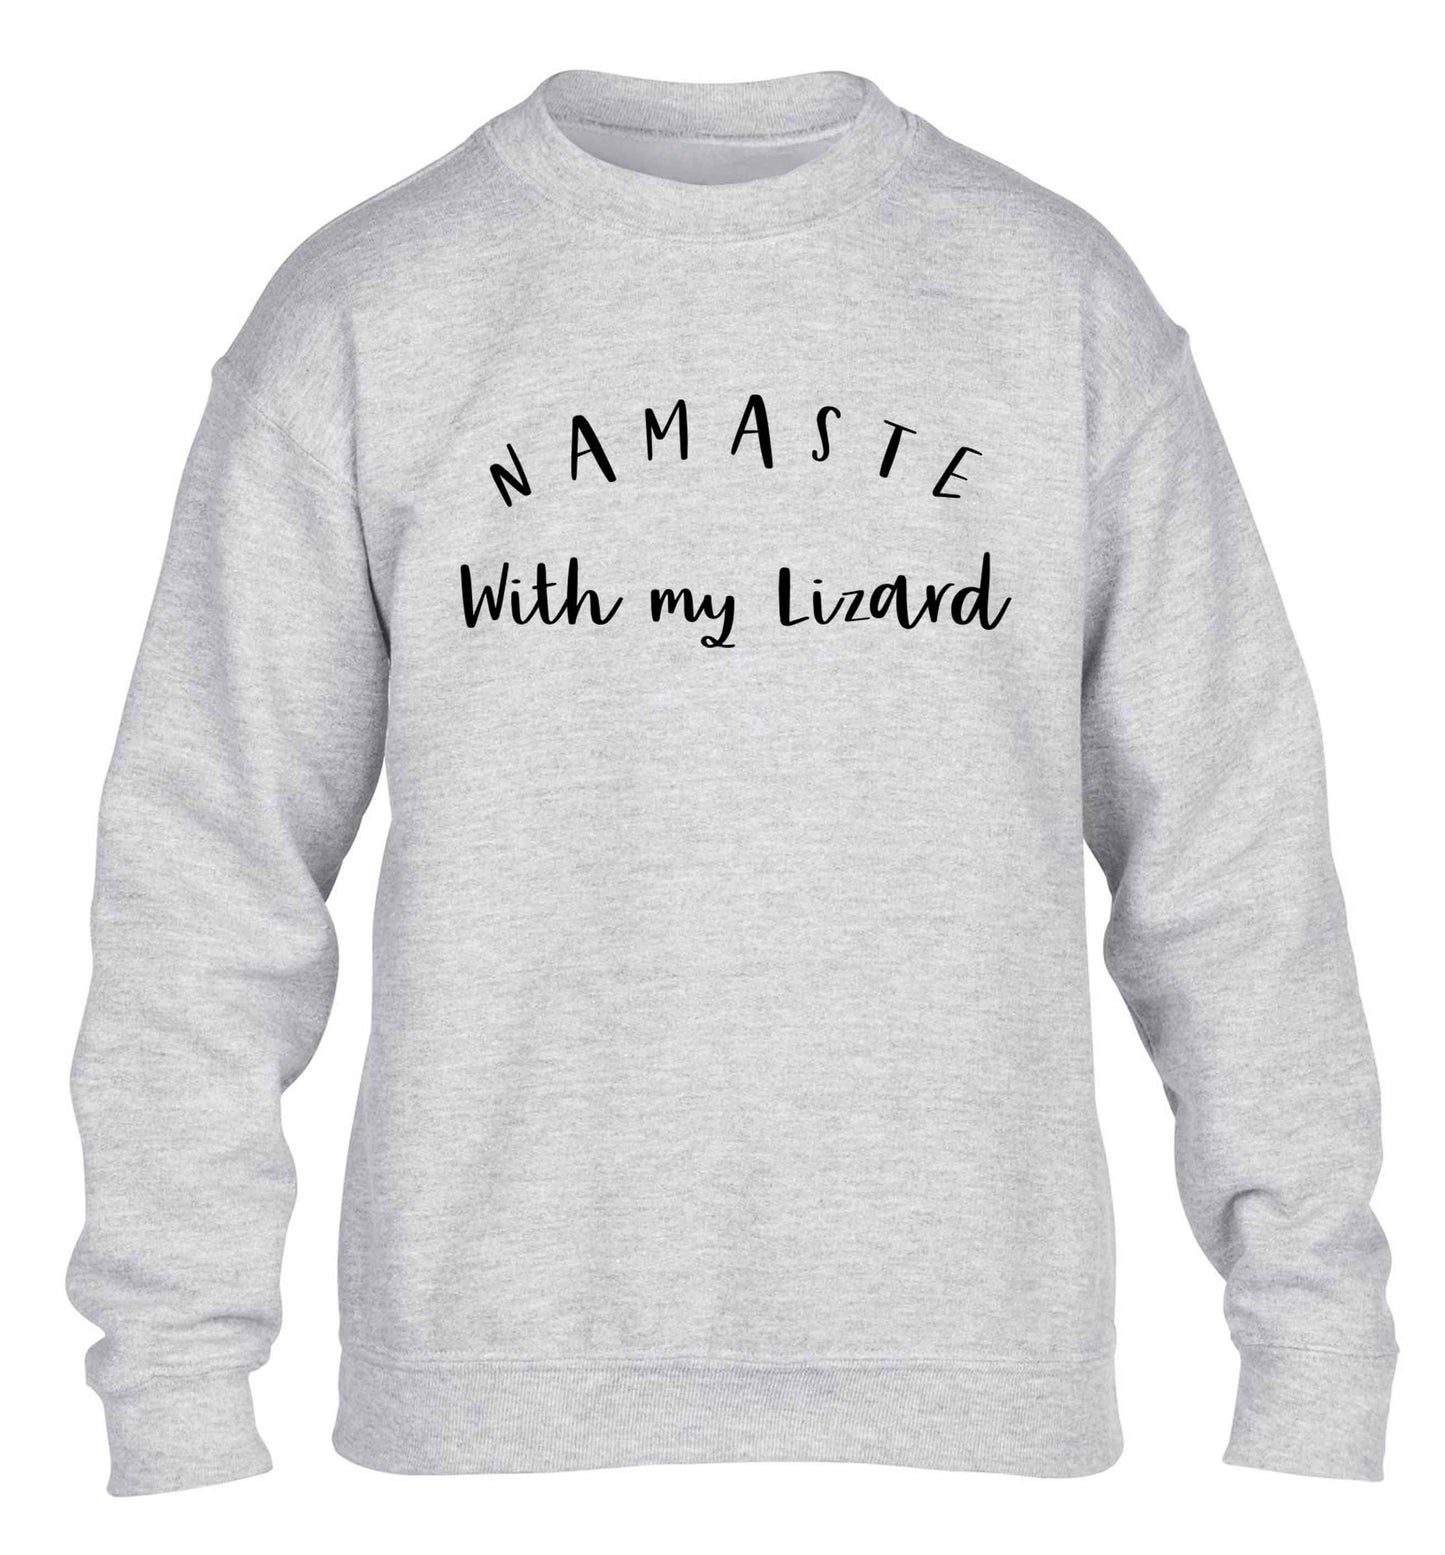 Namaste with my lizard children's grey sweater 12-13 Years